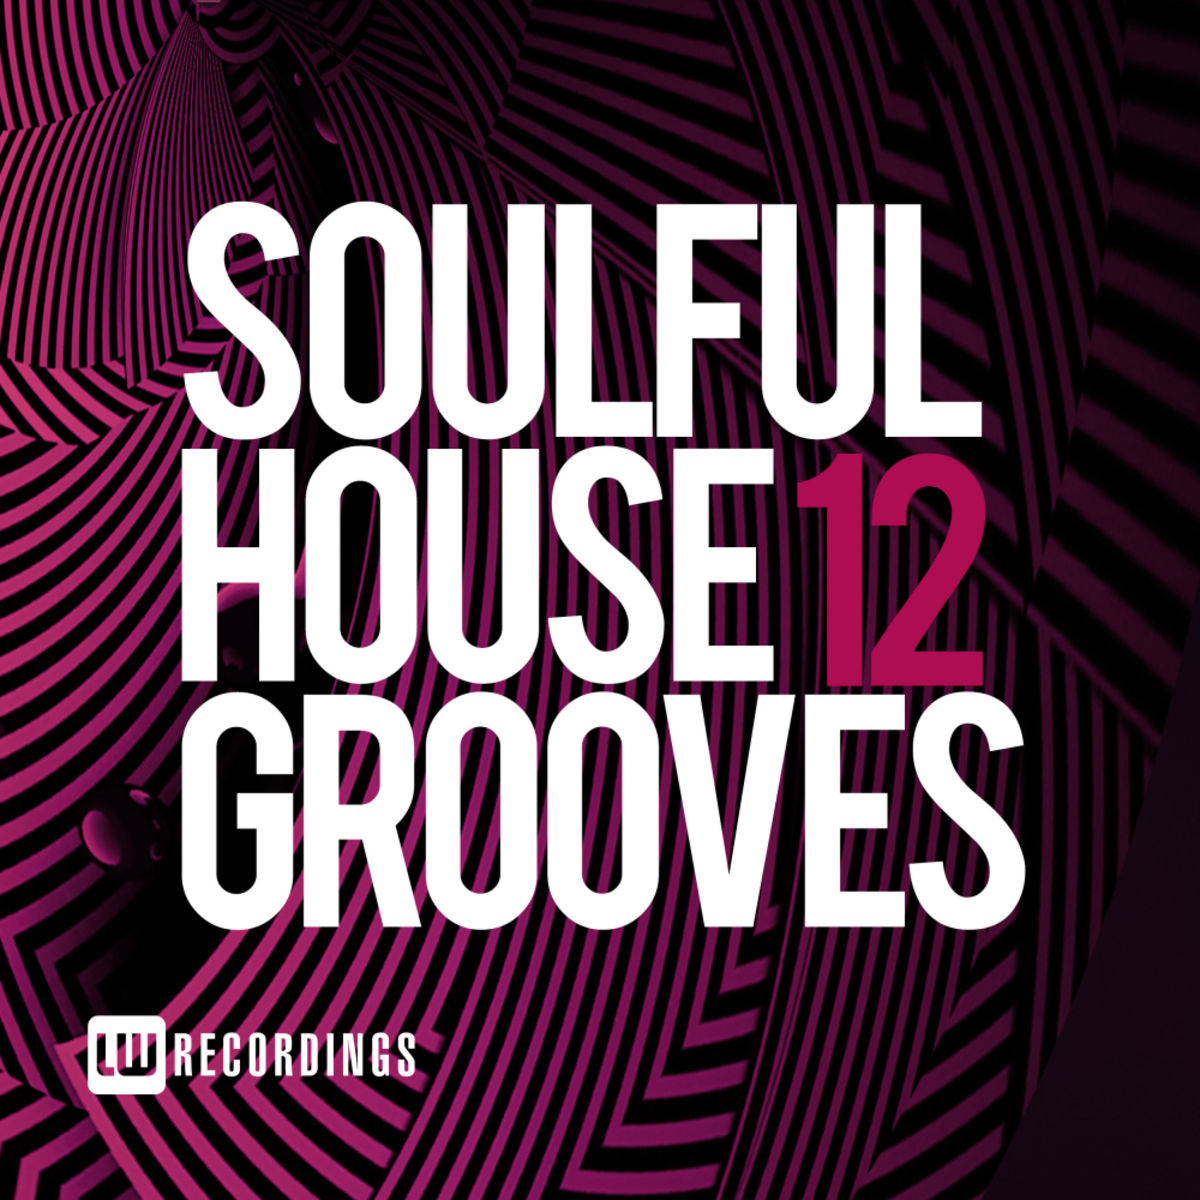 VA - Soulful House Grooves, Vol. 12 / LW Recordings